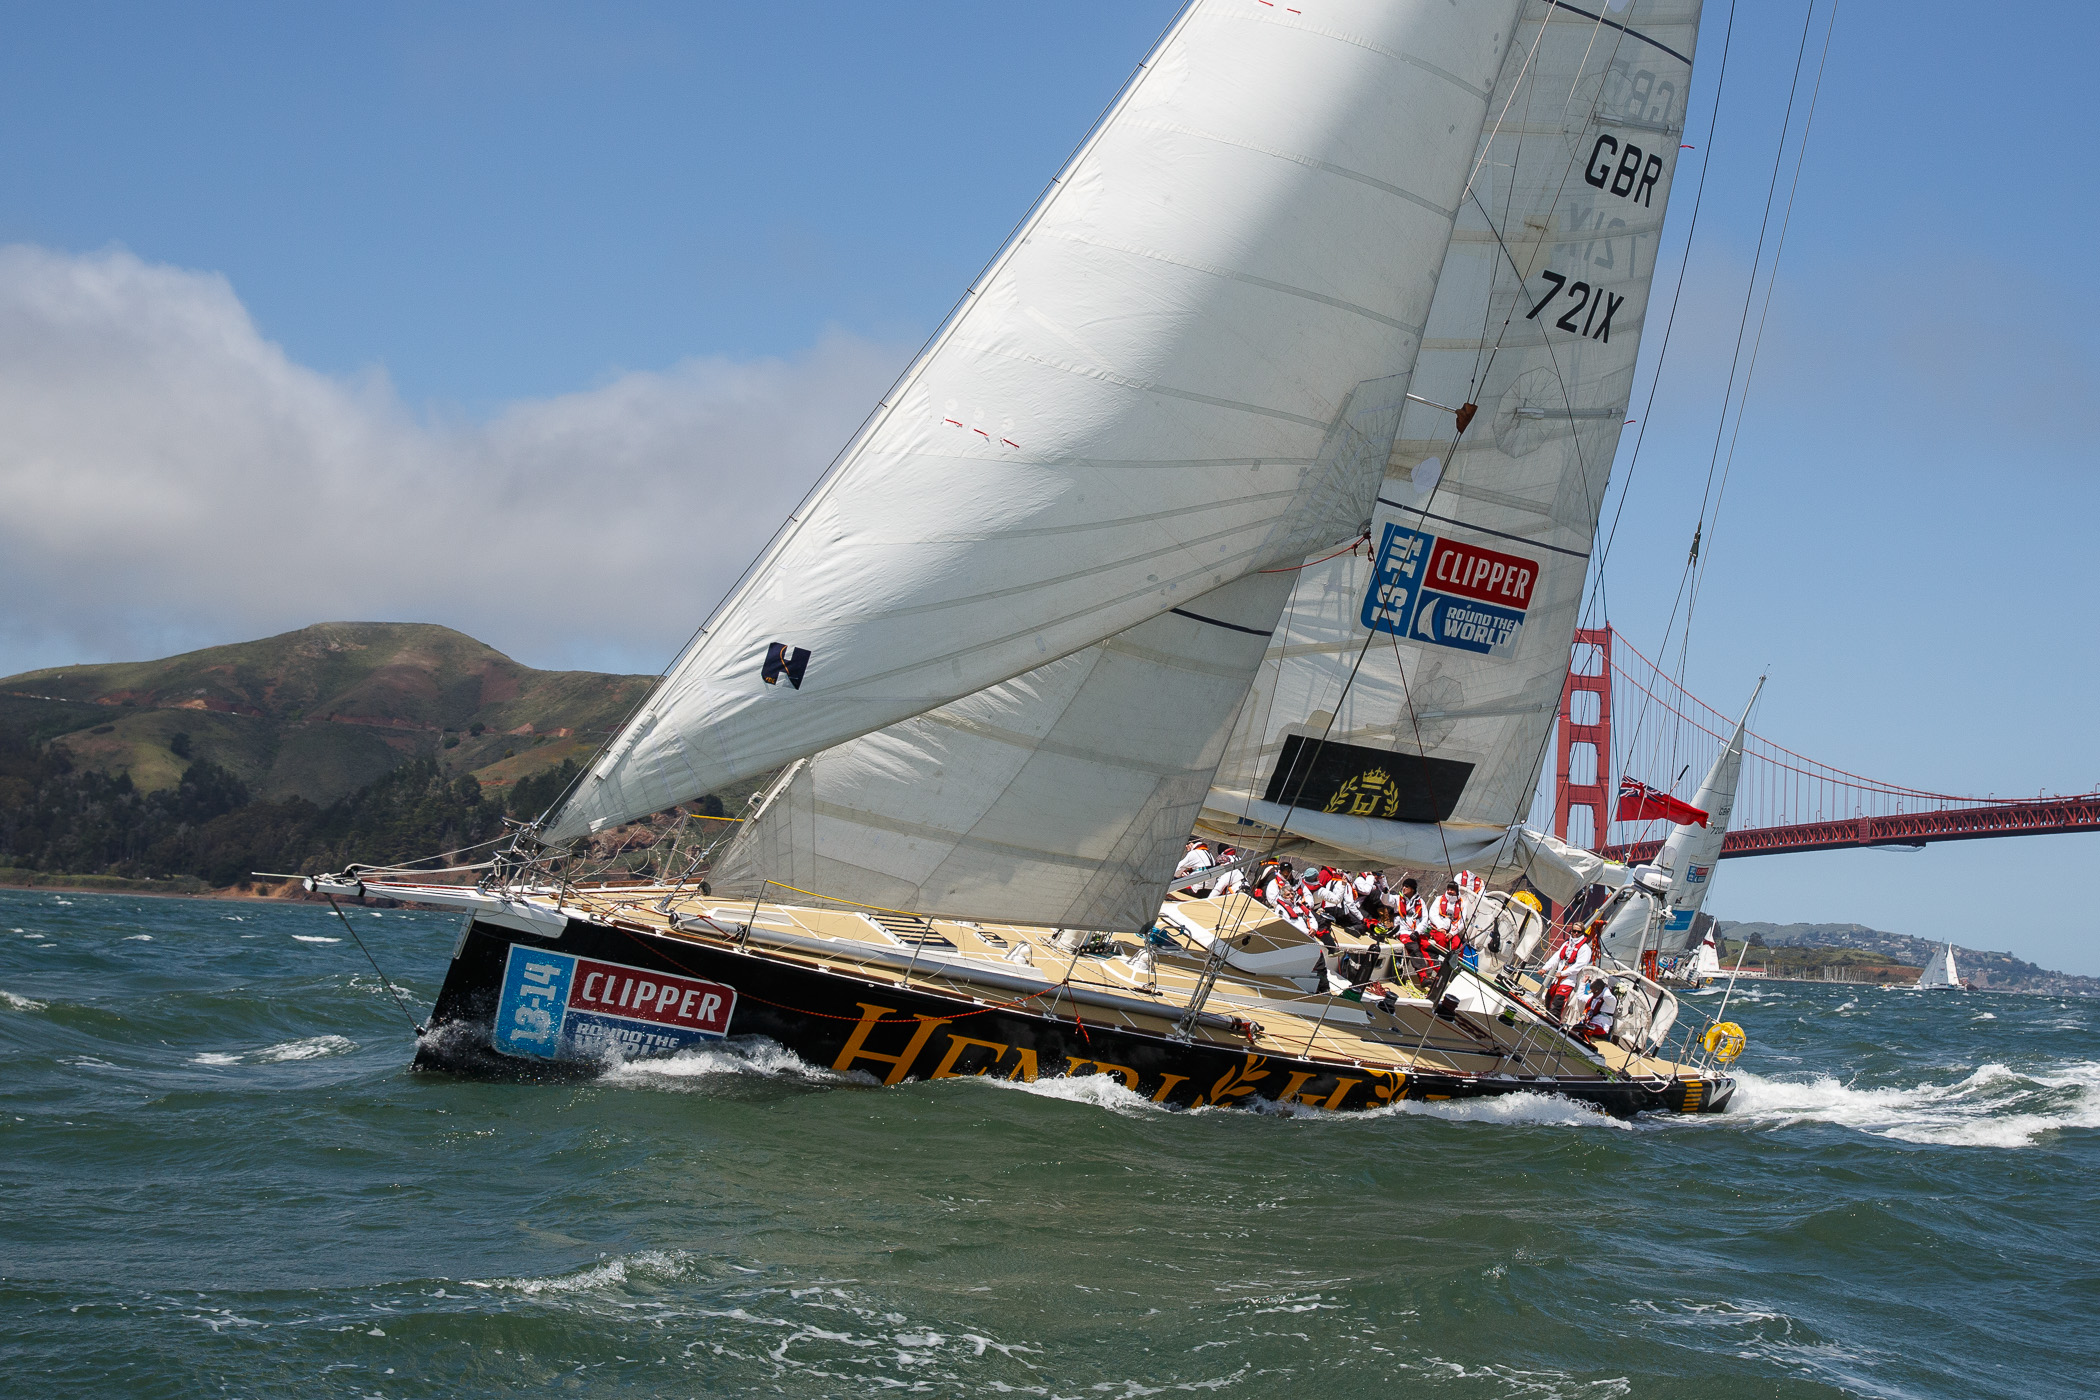 The Henri Lloyd yacht pictured racing under San Francisco's Golden Gate Bridge